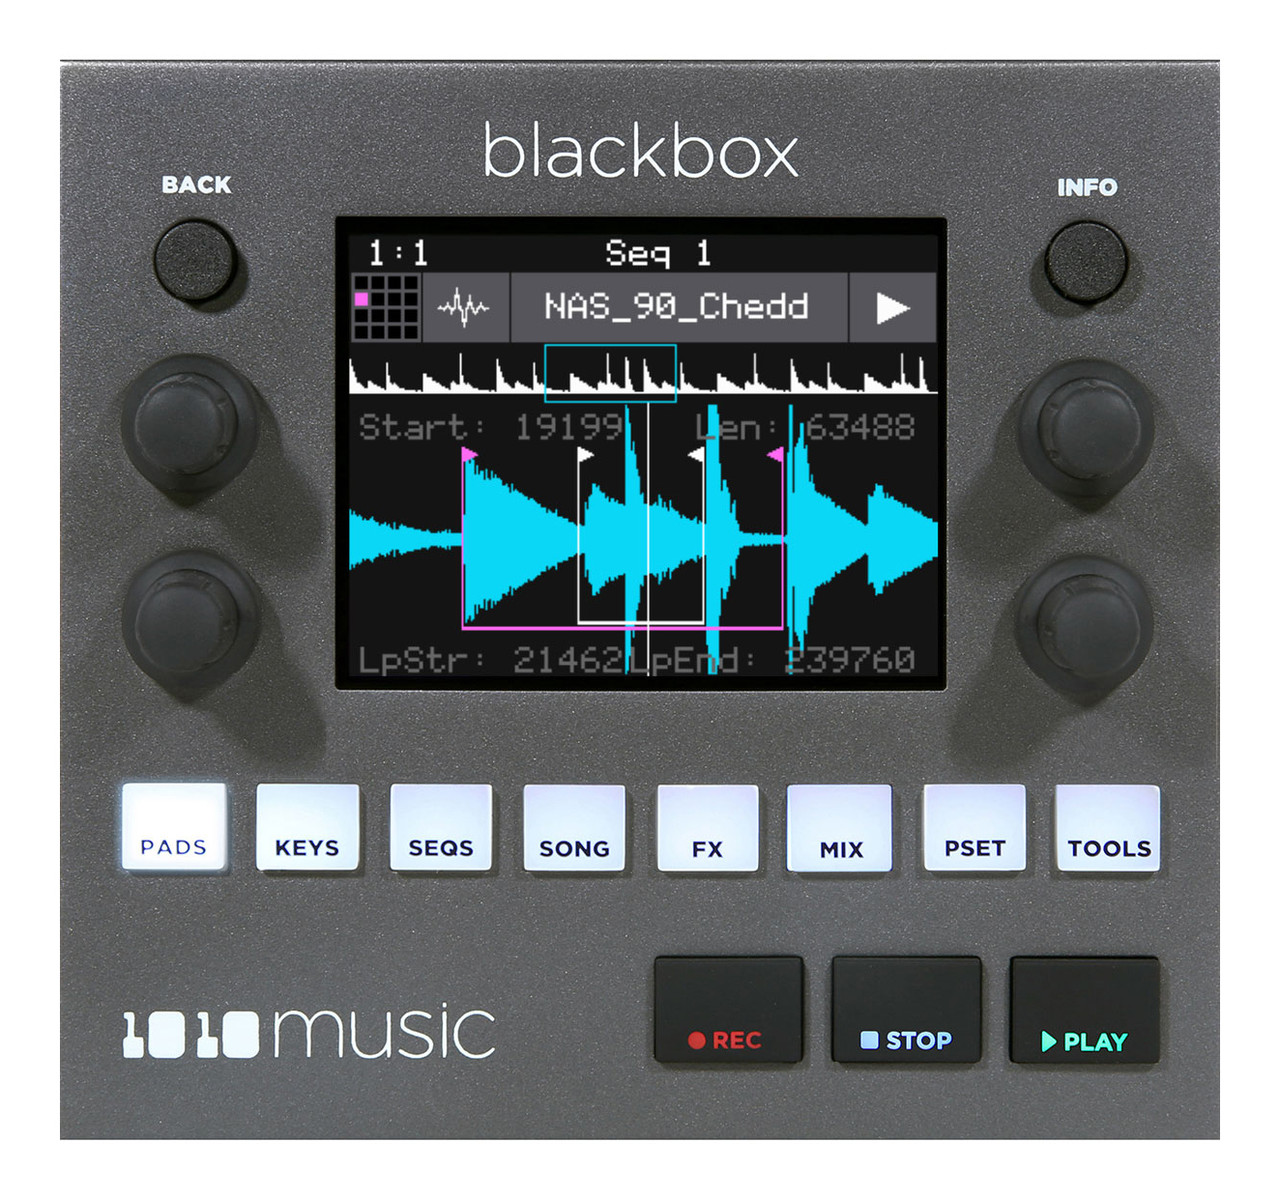 Синтезаторный модуль 1010music Blackbox